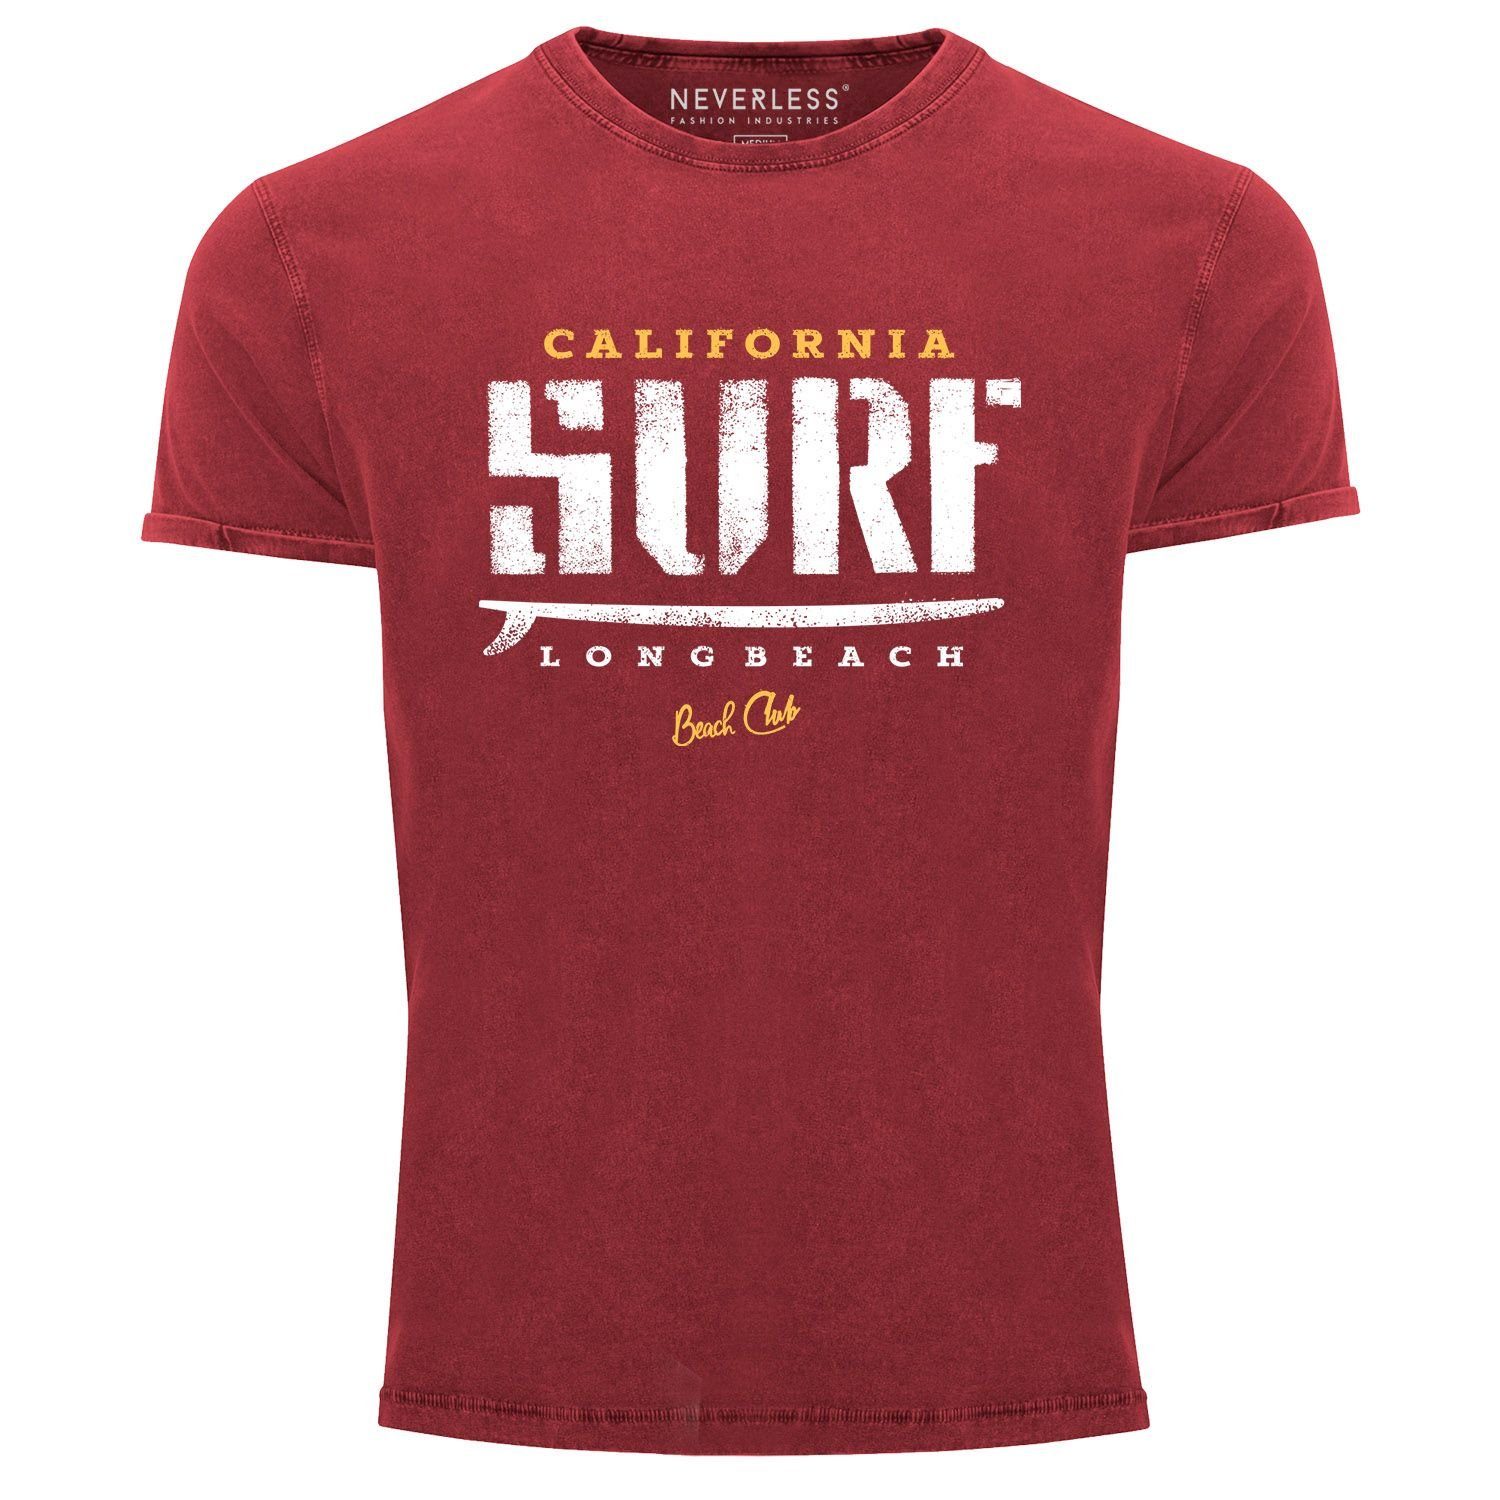 Neverless Print-Shirt Cooles Angesagtes Herren T-Shirt Vintage Shirt California Surf Aufdruck Used Look Slim Fit Neverless® mit Print rot